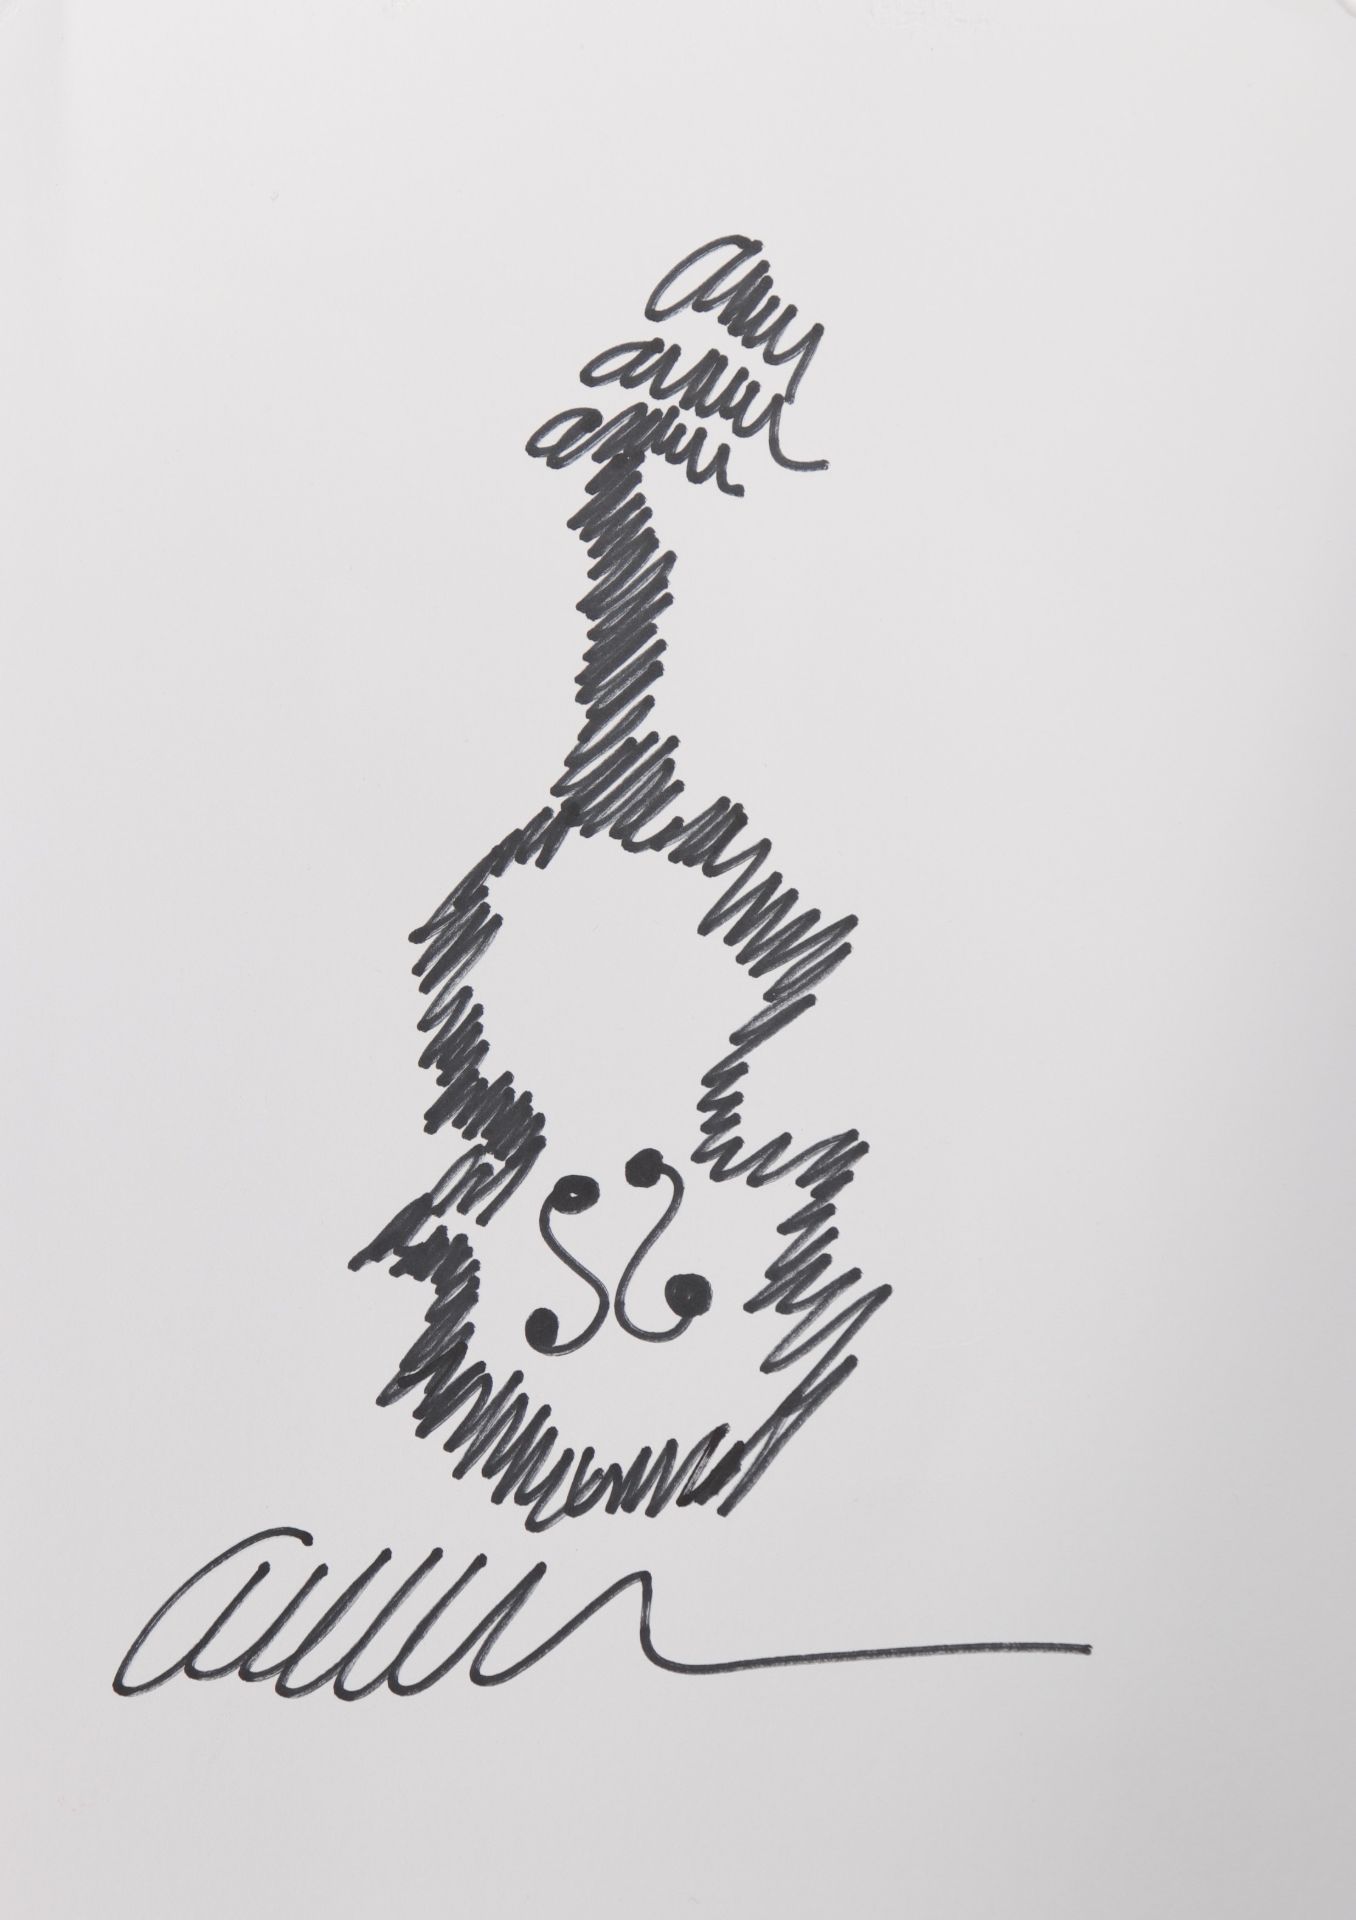 Arman Fernandez. "Violin". Felt pen drawing on paper. Signed "Arman" four times.